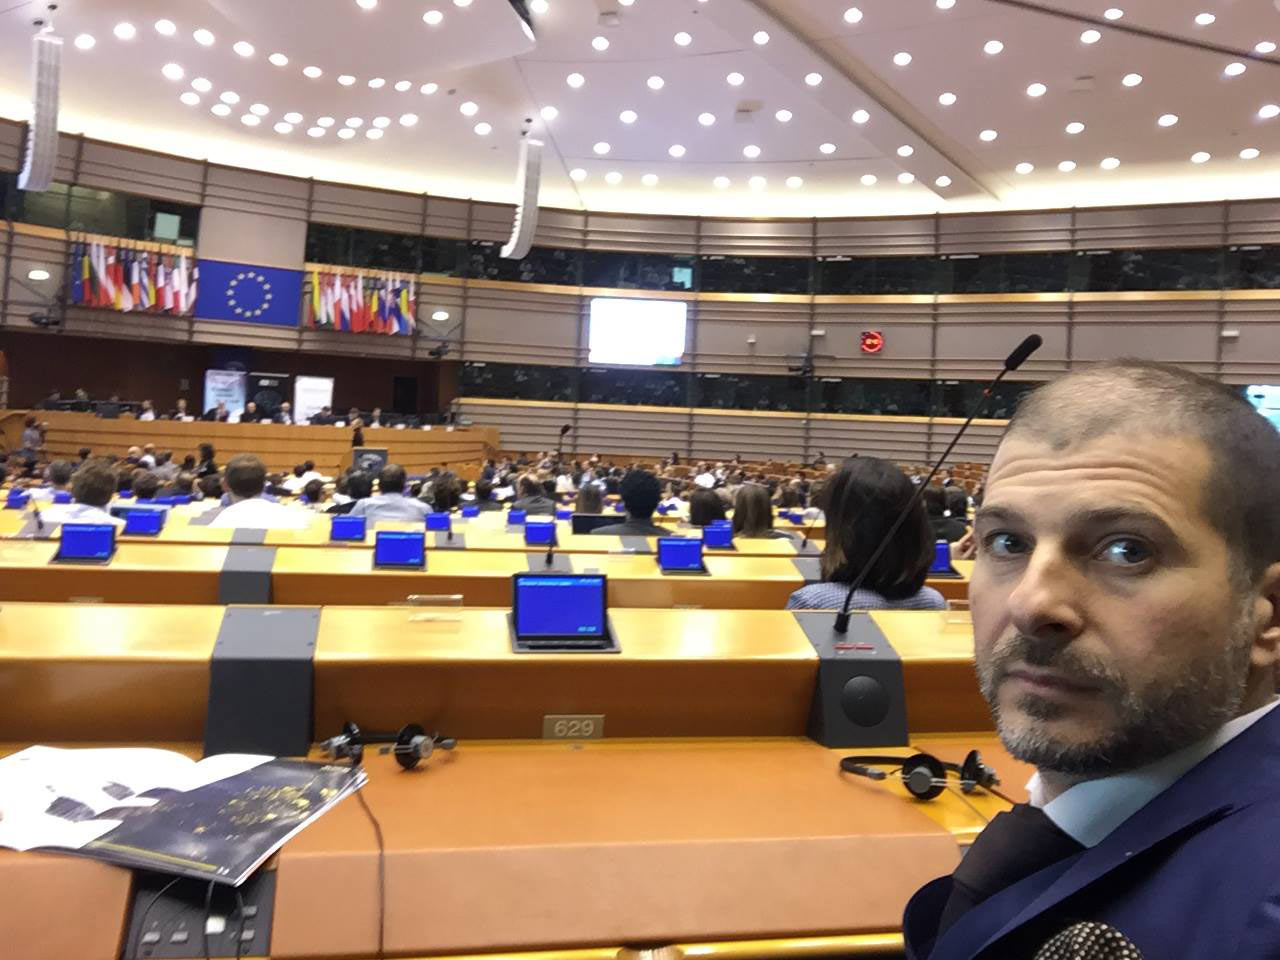 Plamen Russev in the European Parliament, Brussels 2017